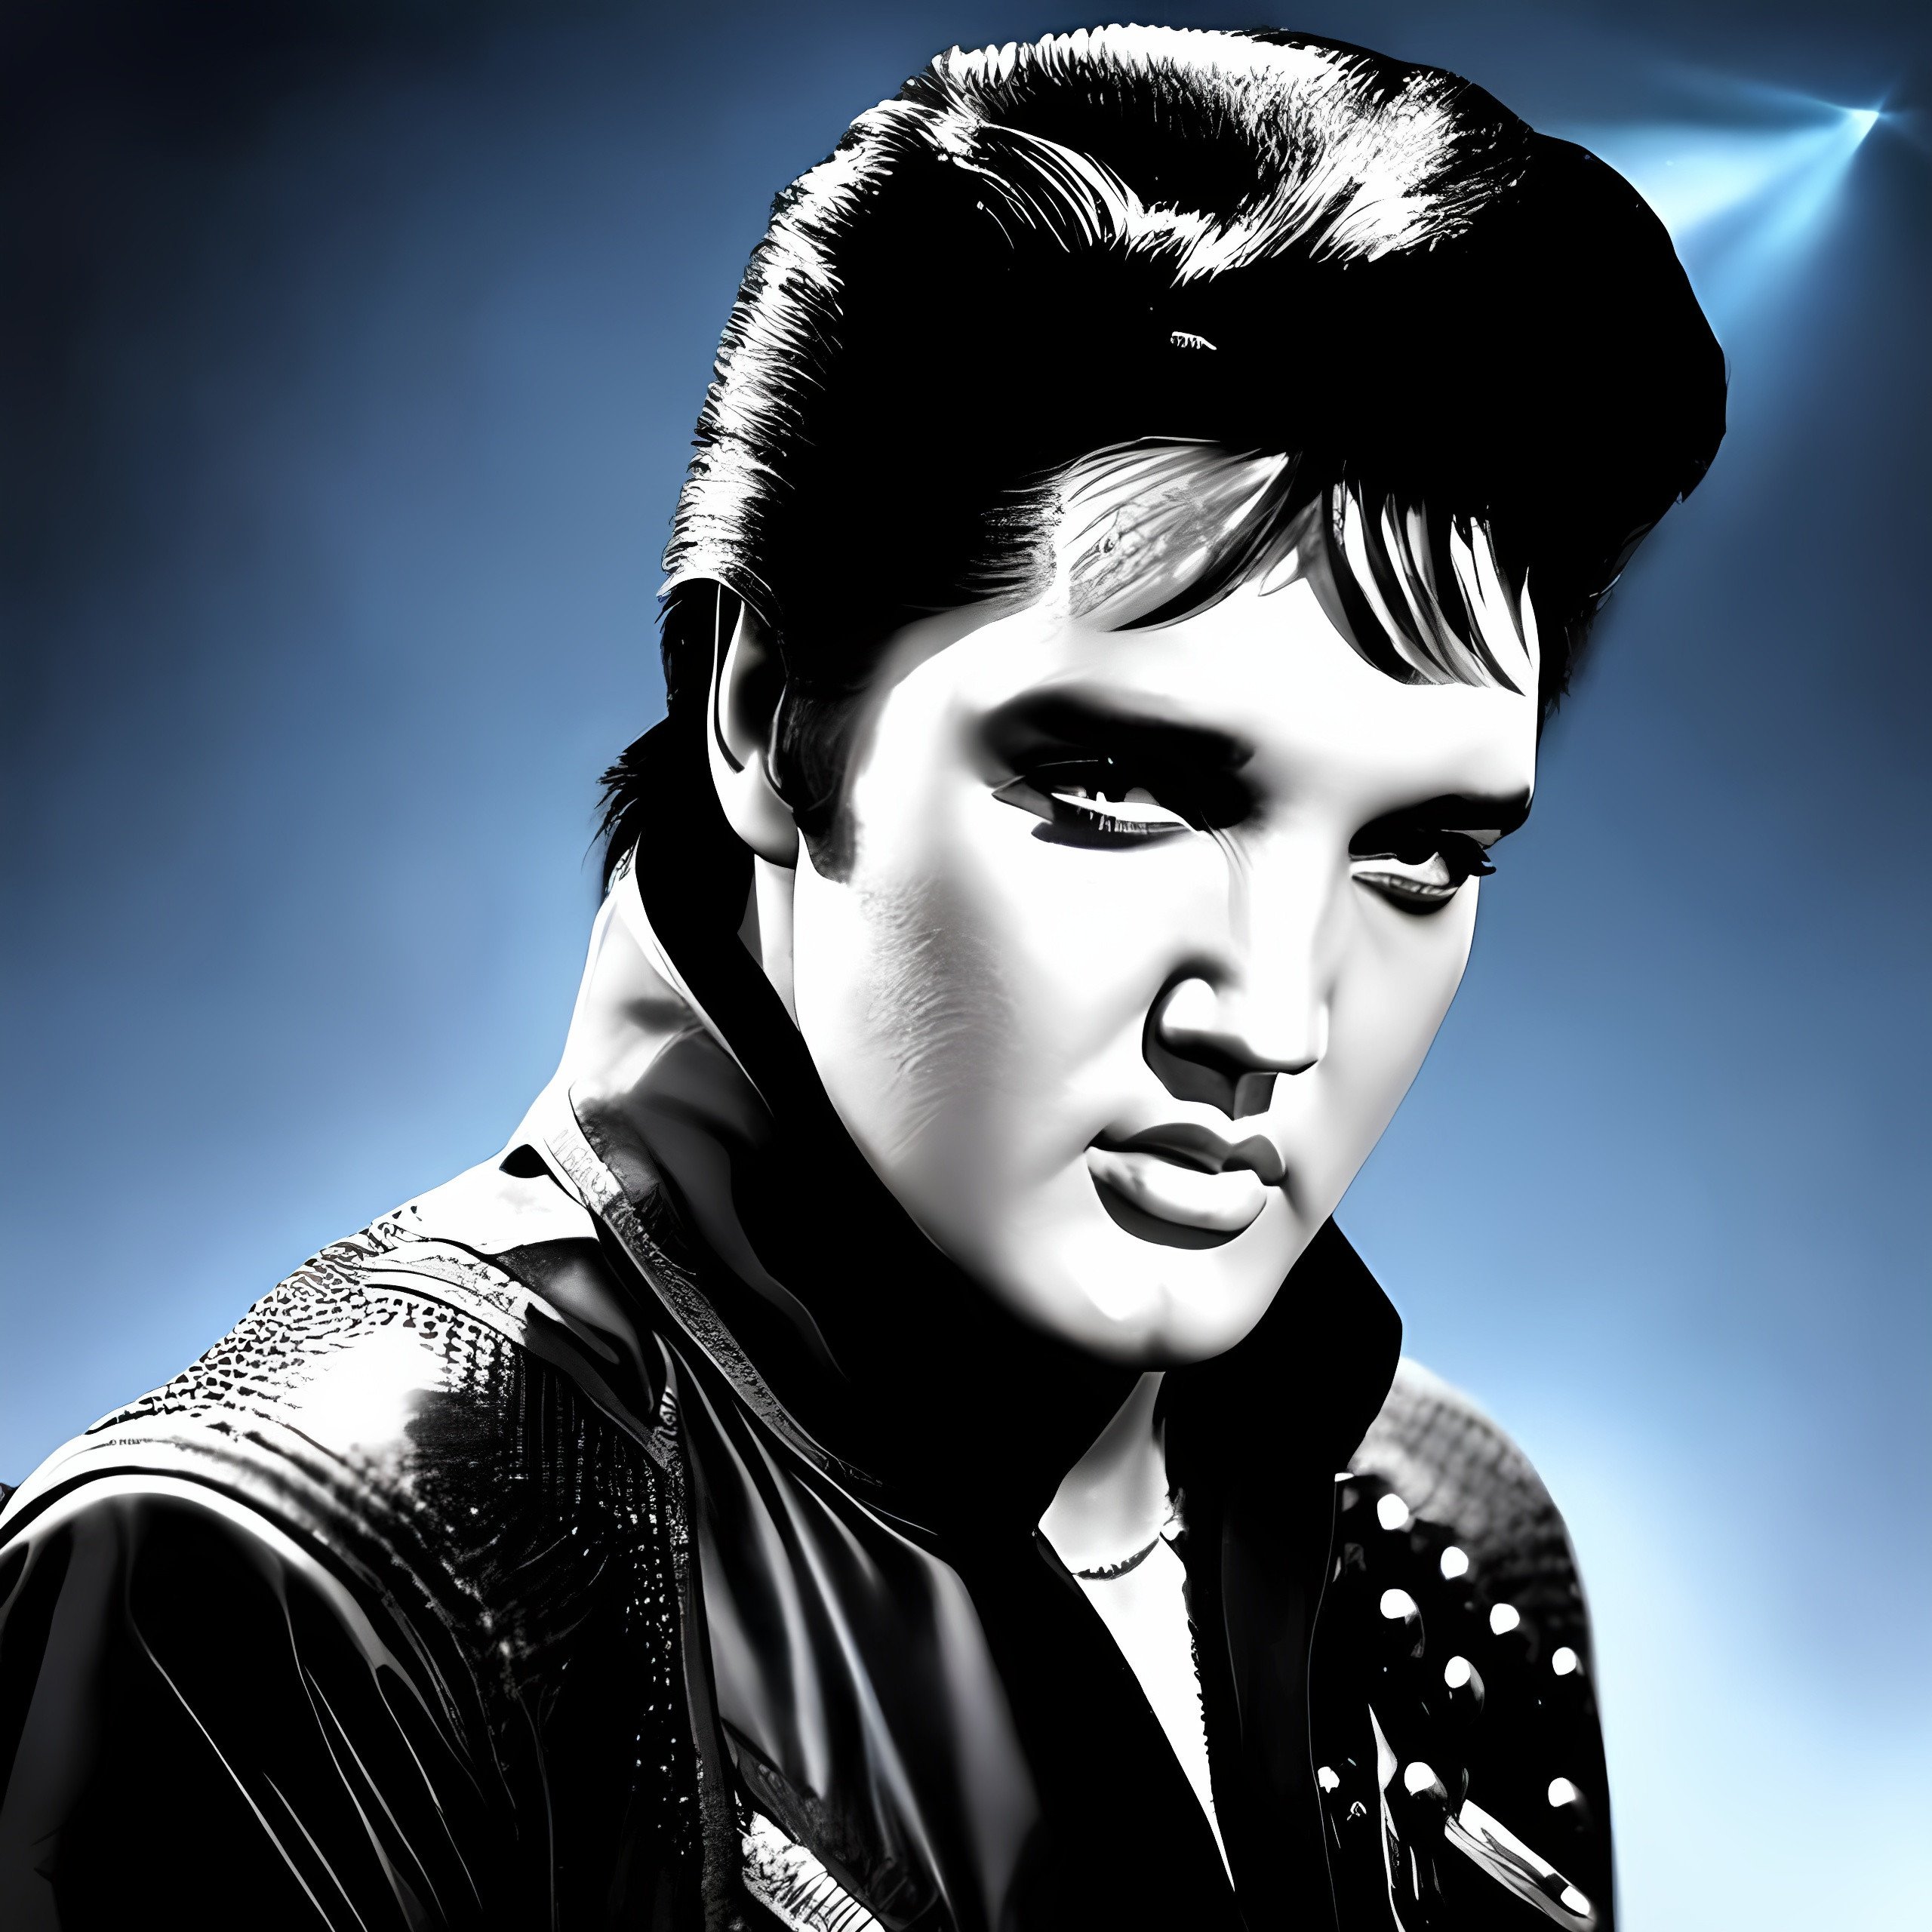 Elvis presley as a cyborg terminator | OpenArt